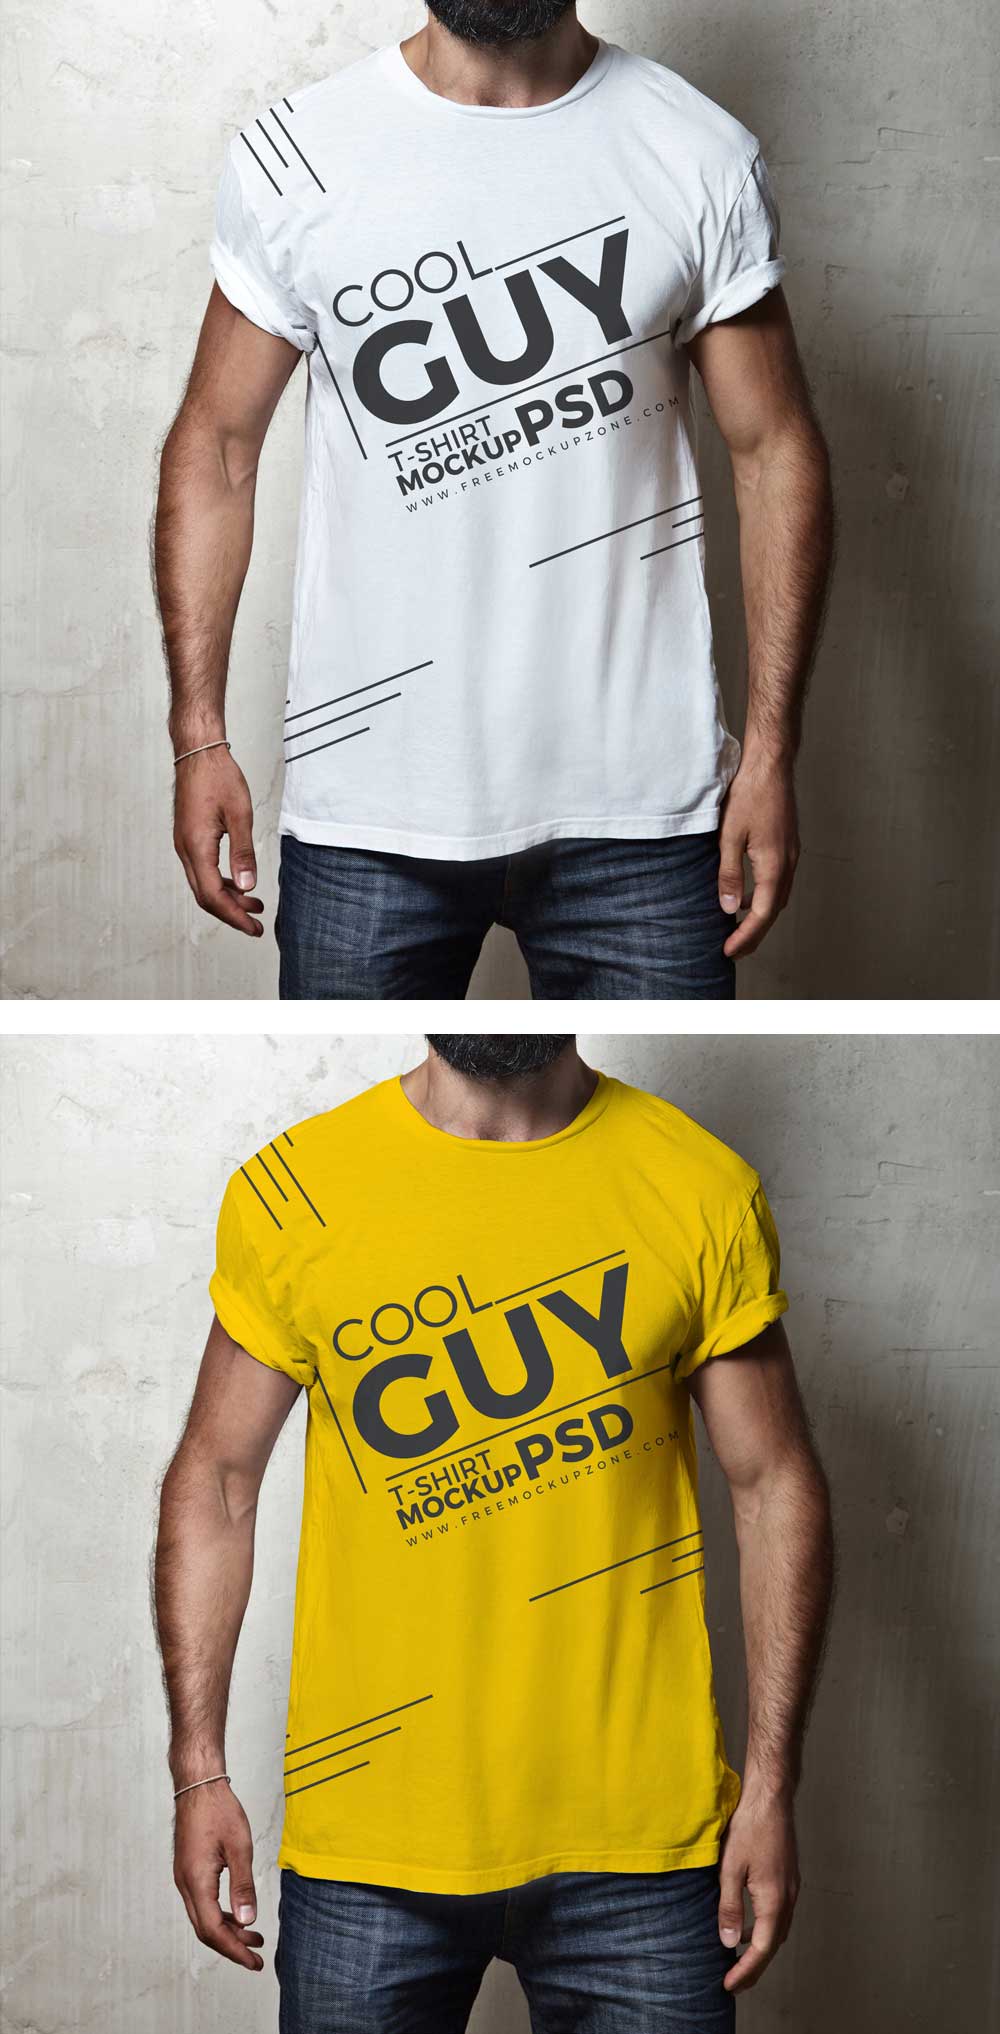 Free-Cool-Guy-T-Shirt-MockUp-Psd